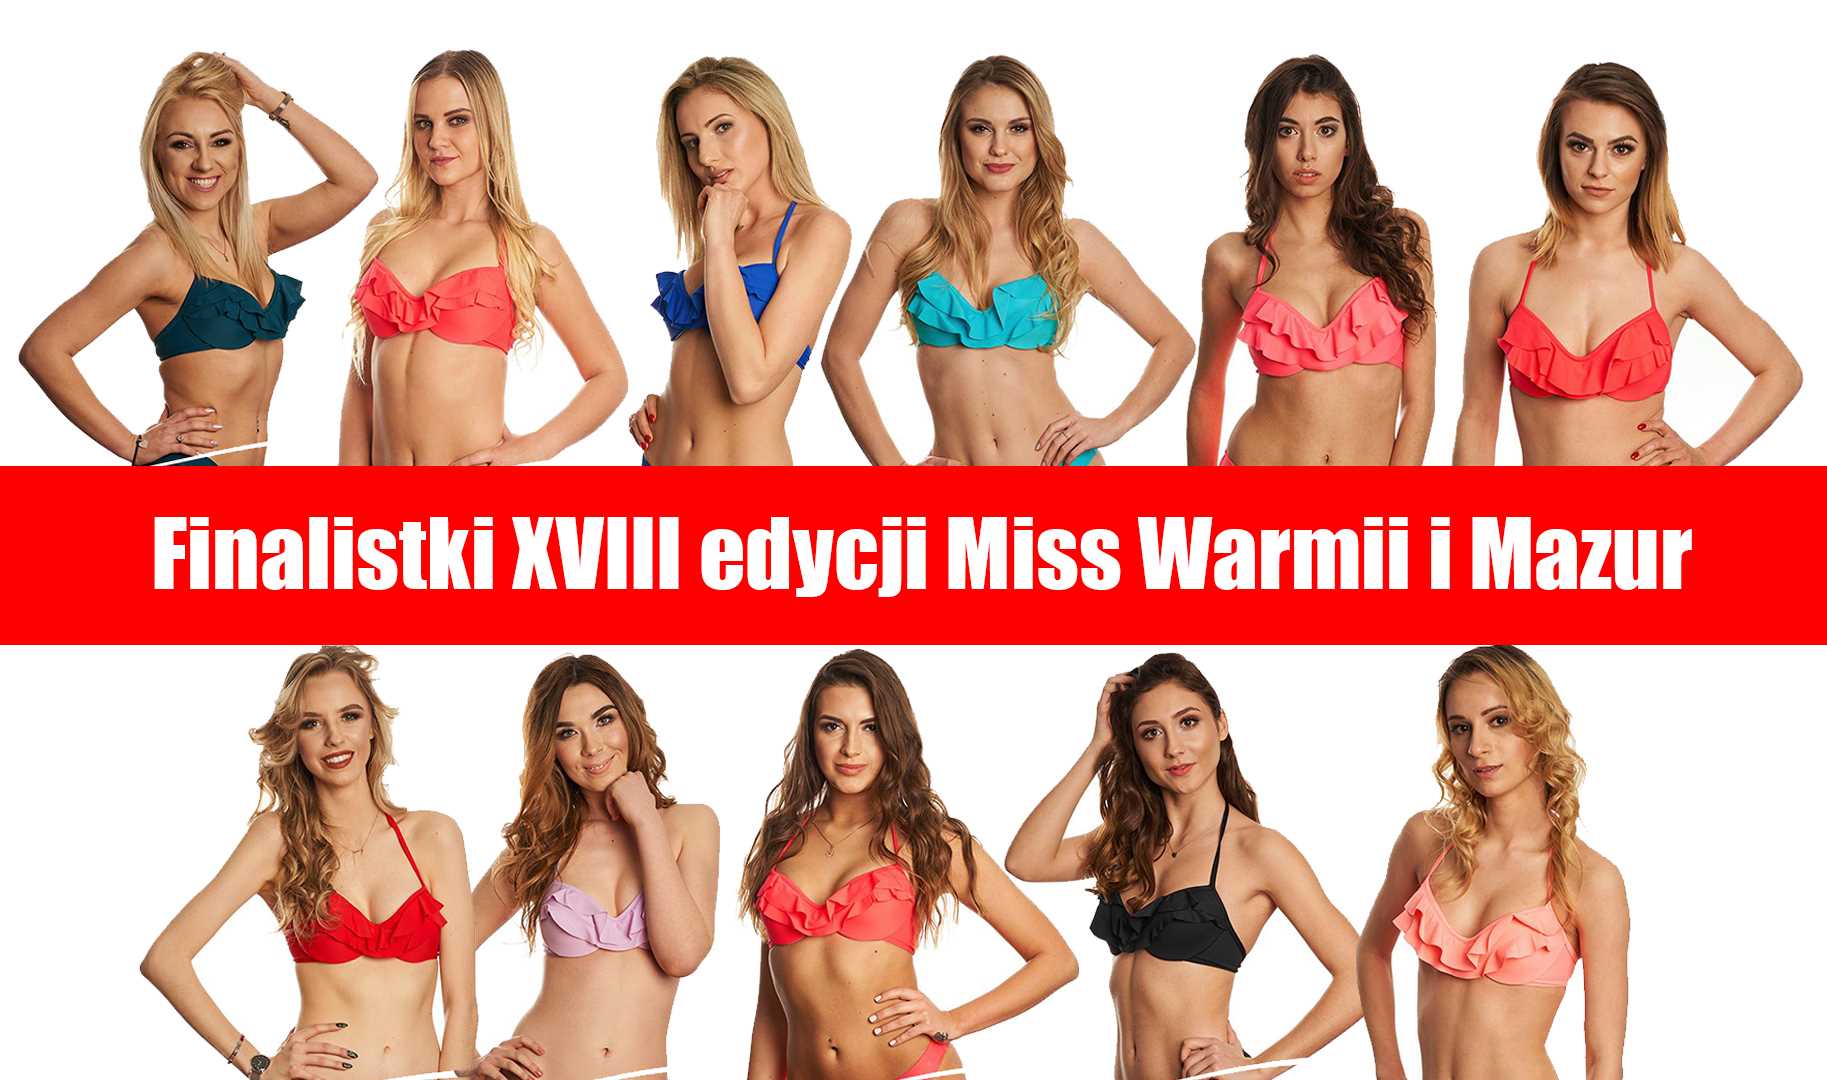 Miss Warmii i Mazur finalistki, Finalistki XXVIII edycji Miss Warmii i Mazur., Miss Warmii i Mazur